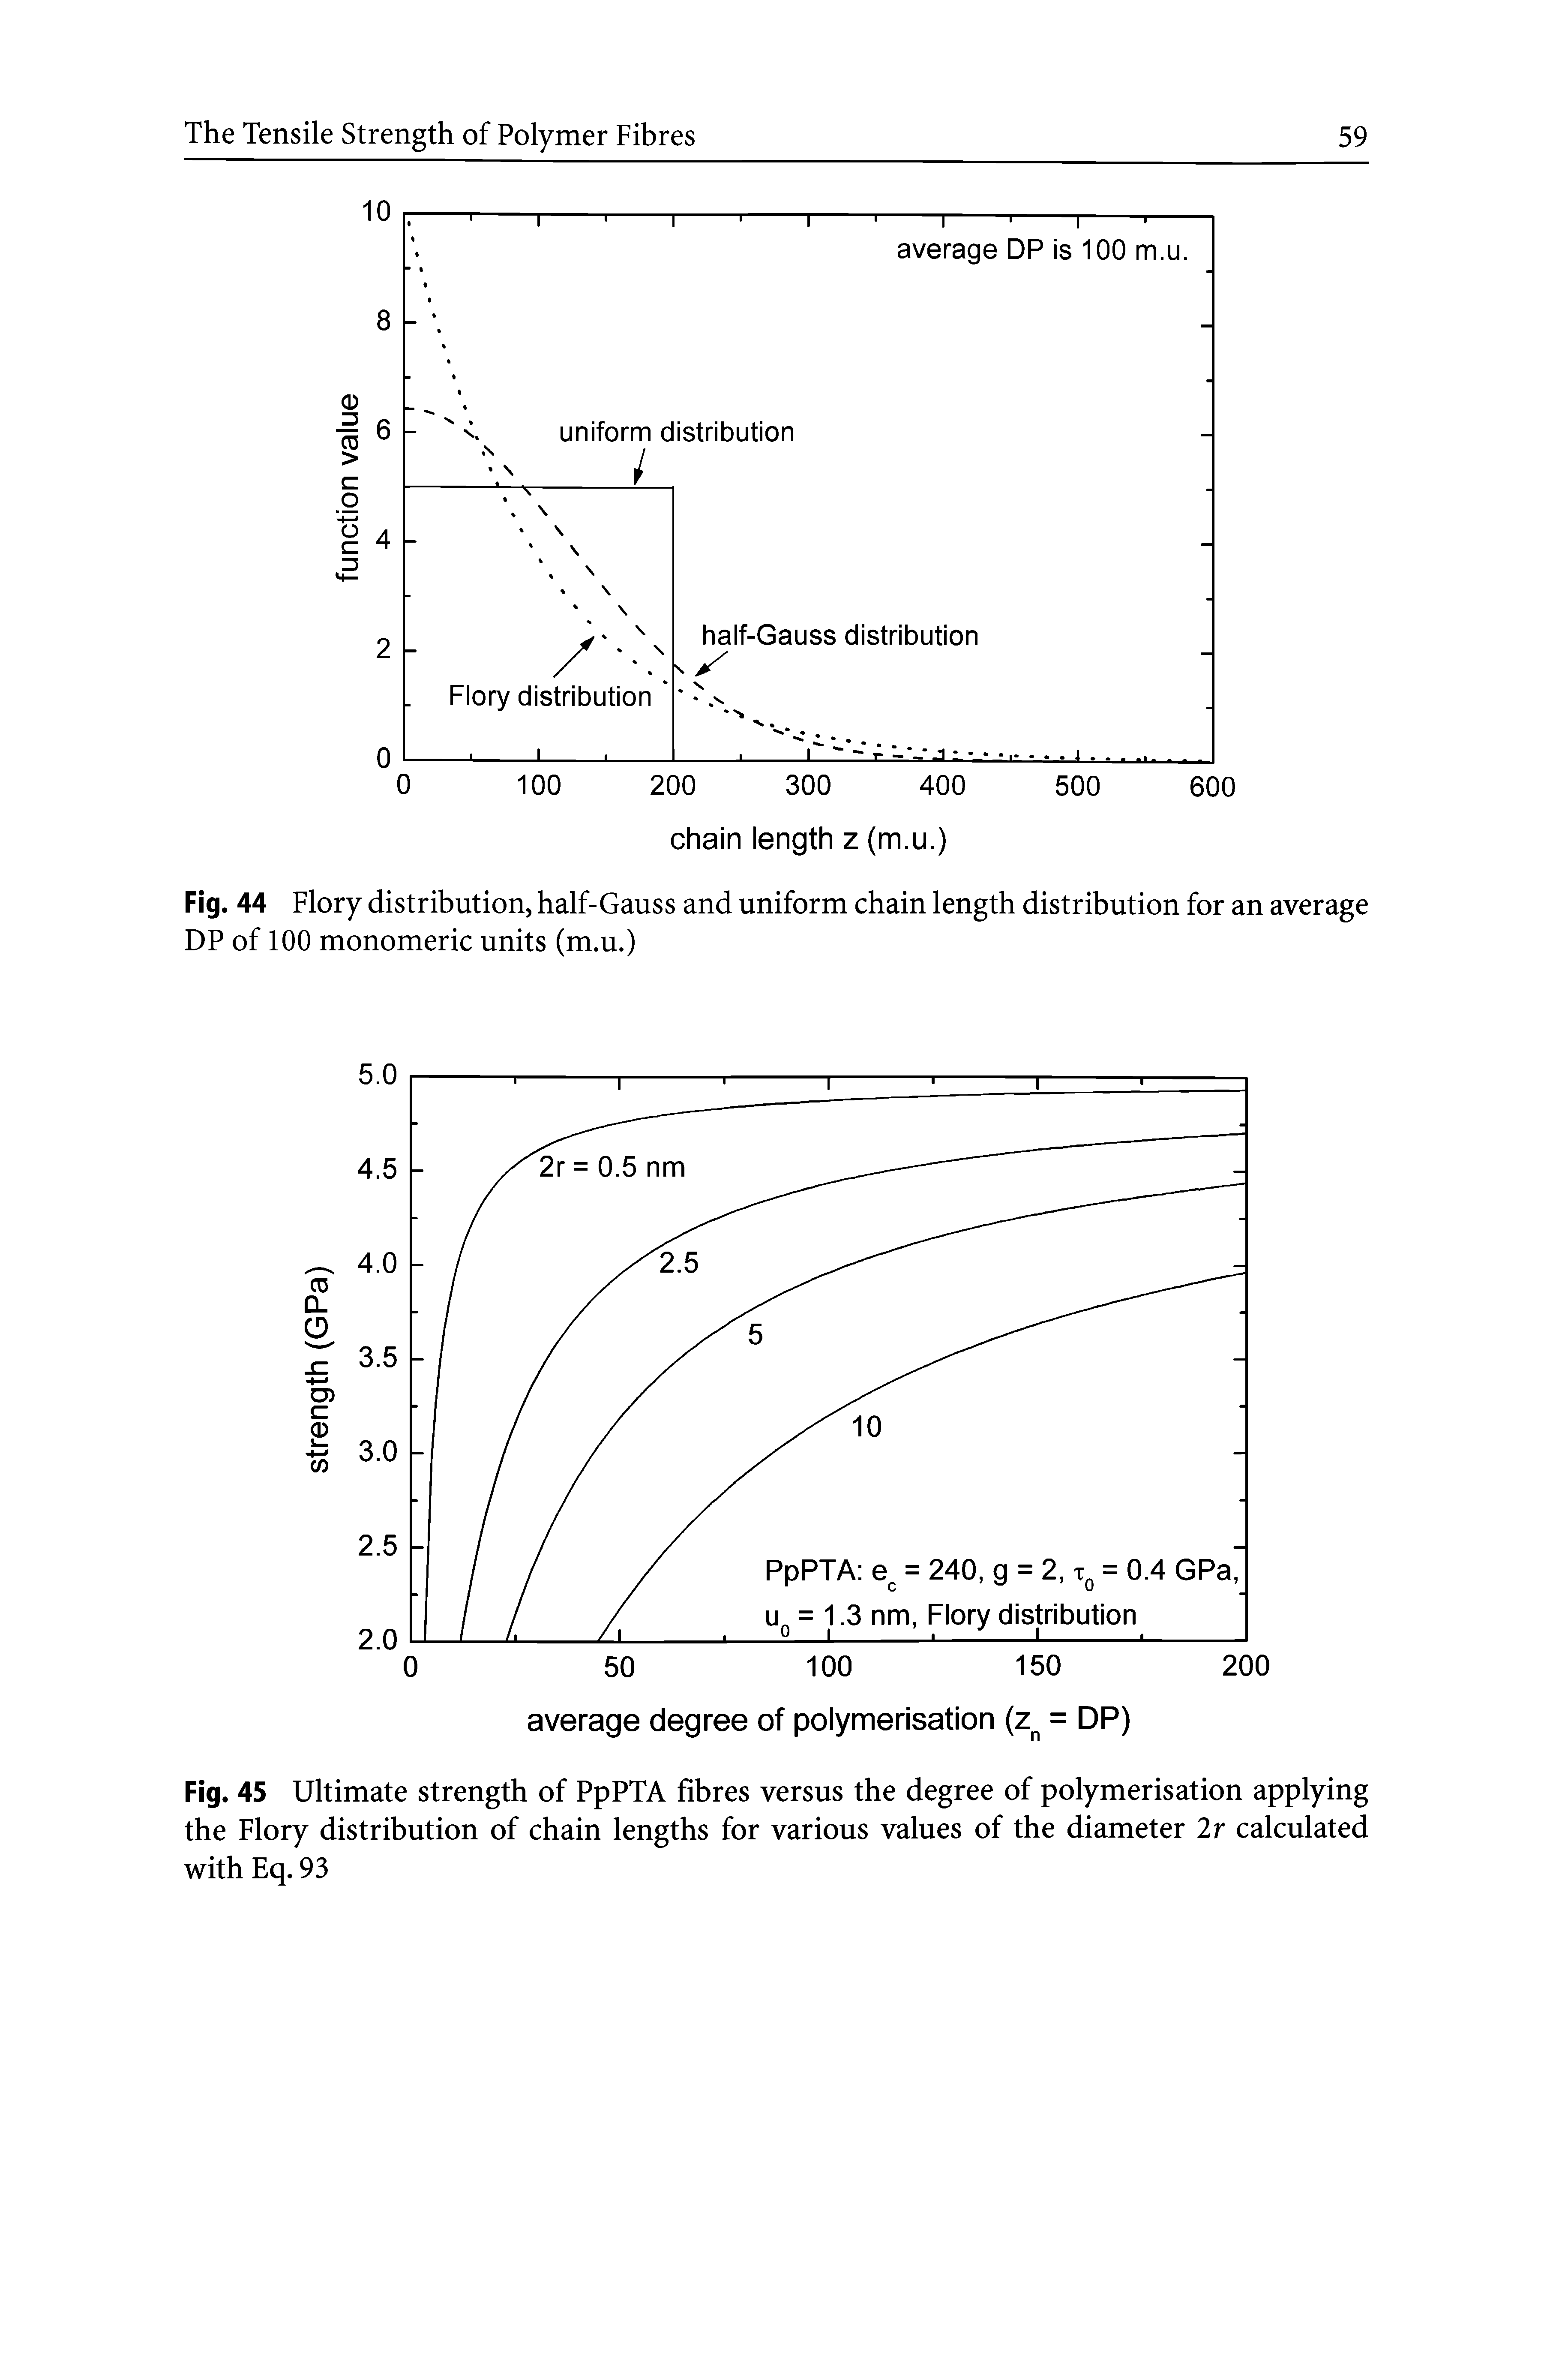 Fig. 44 Flory distribution, half-Gauss and uniform chain length distribution for an average DP of 100 monomeric units (m.u.)...